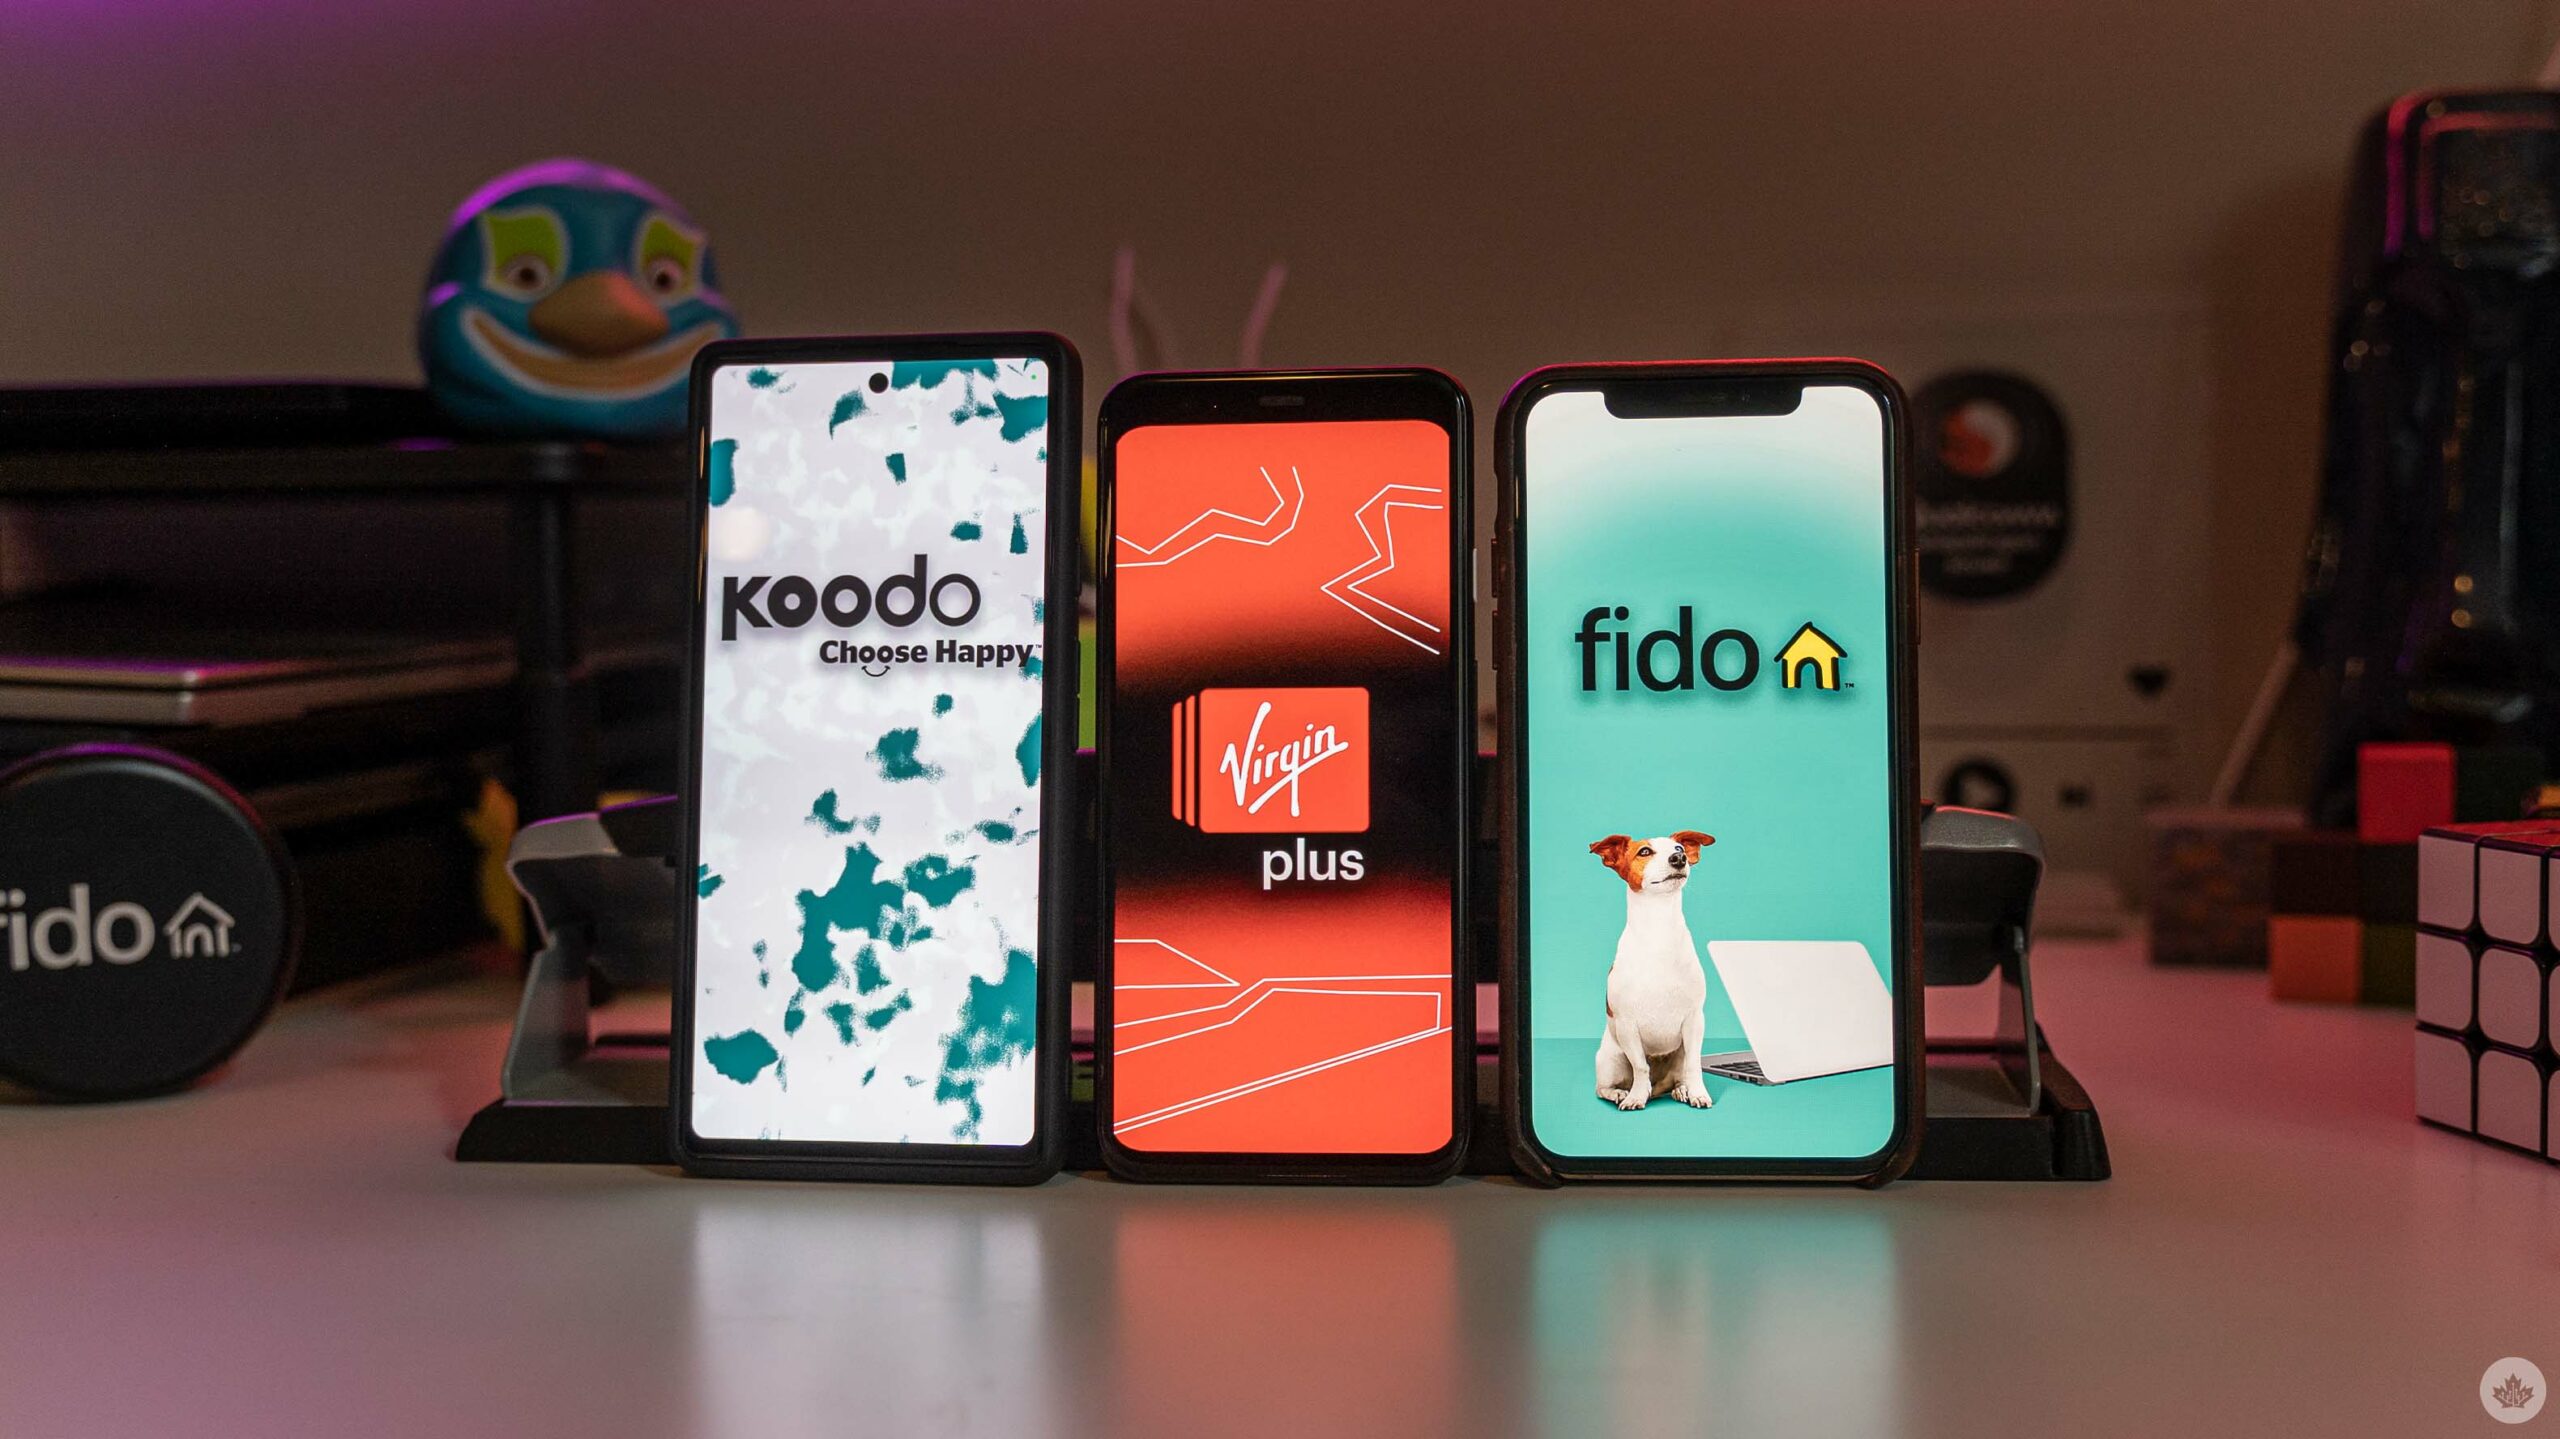 Koodo, Virgin Plus, and Fido logos on smartphones.